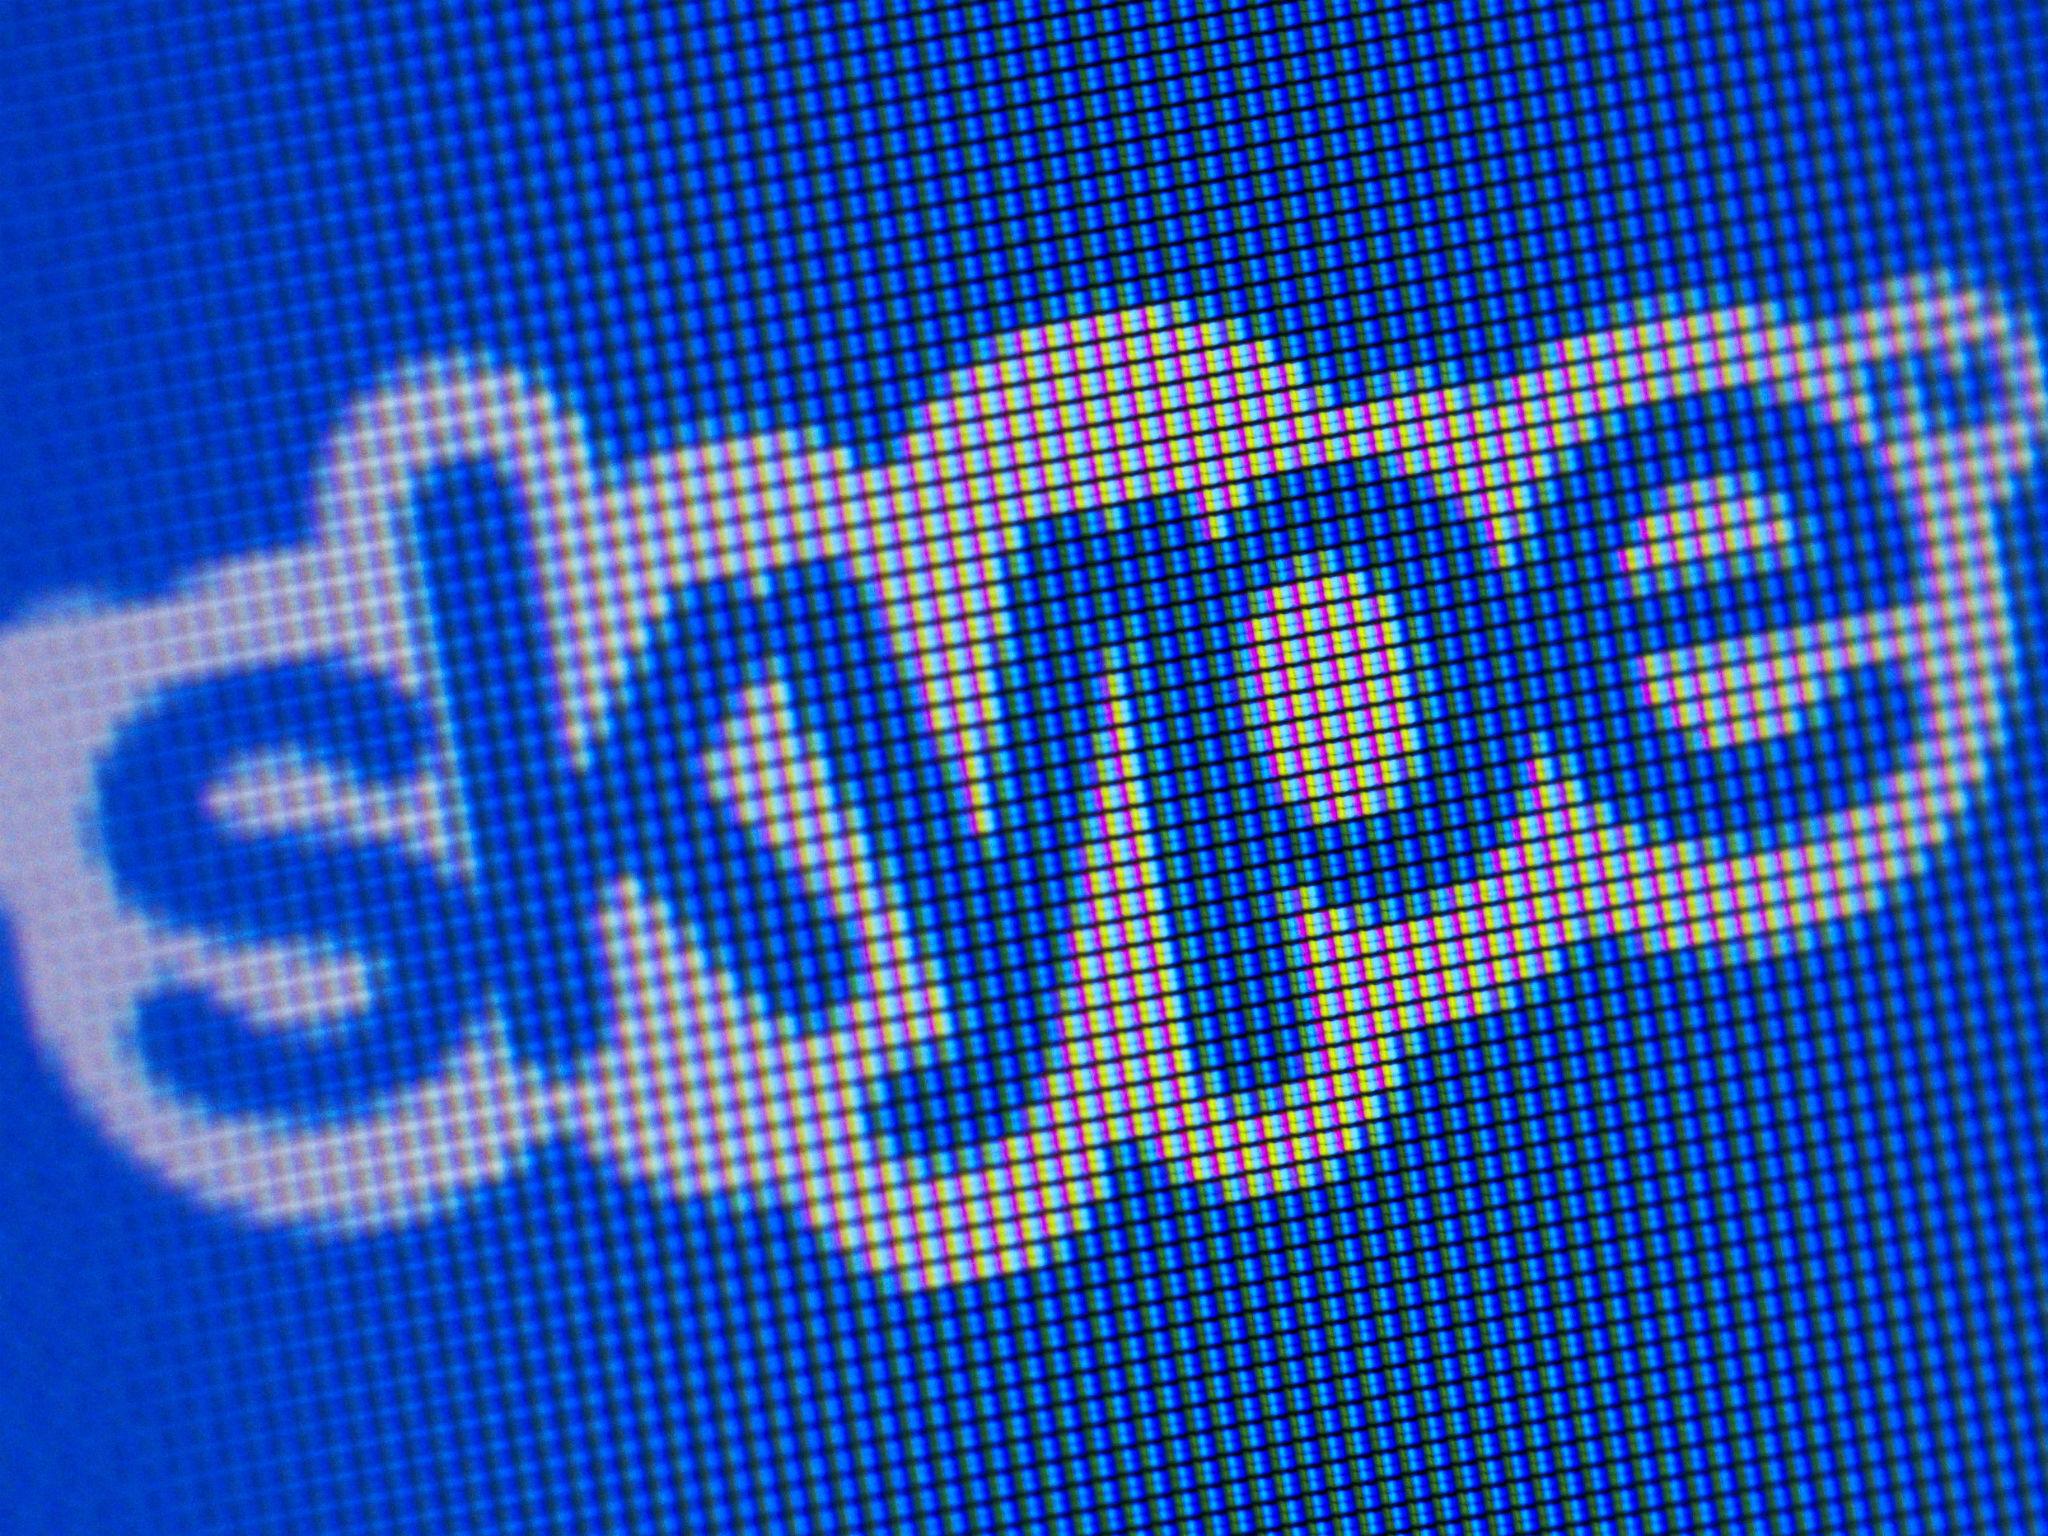 do you need skype web plug in for mac